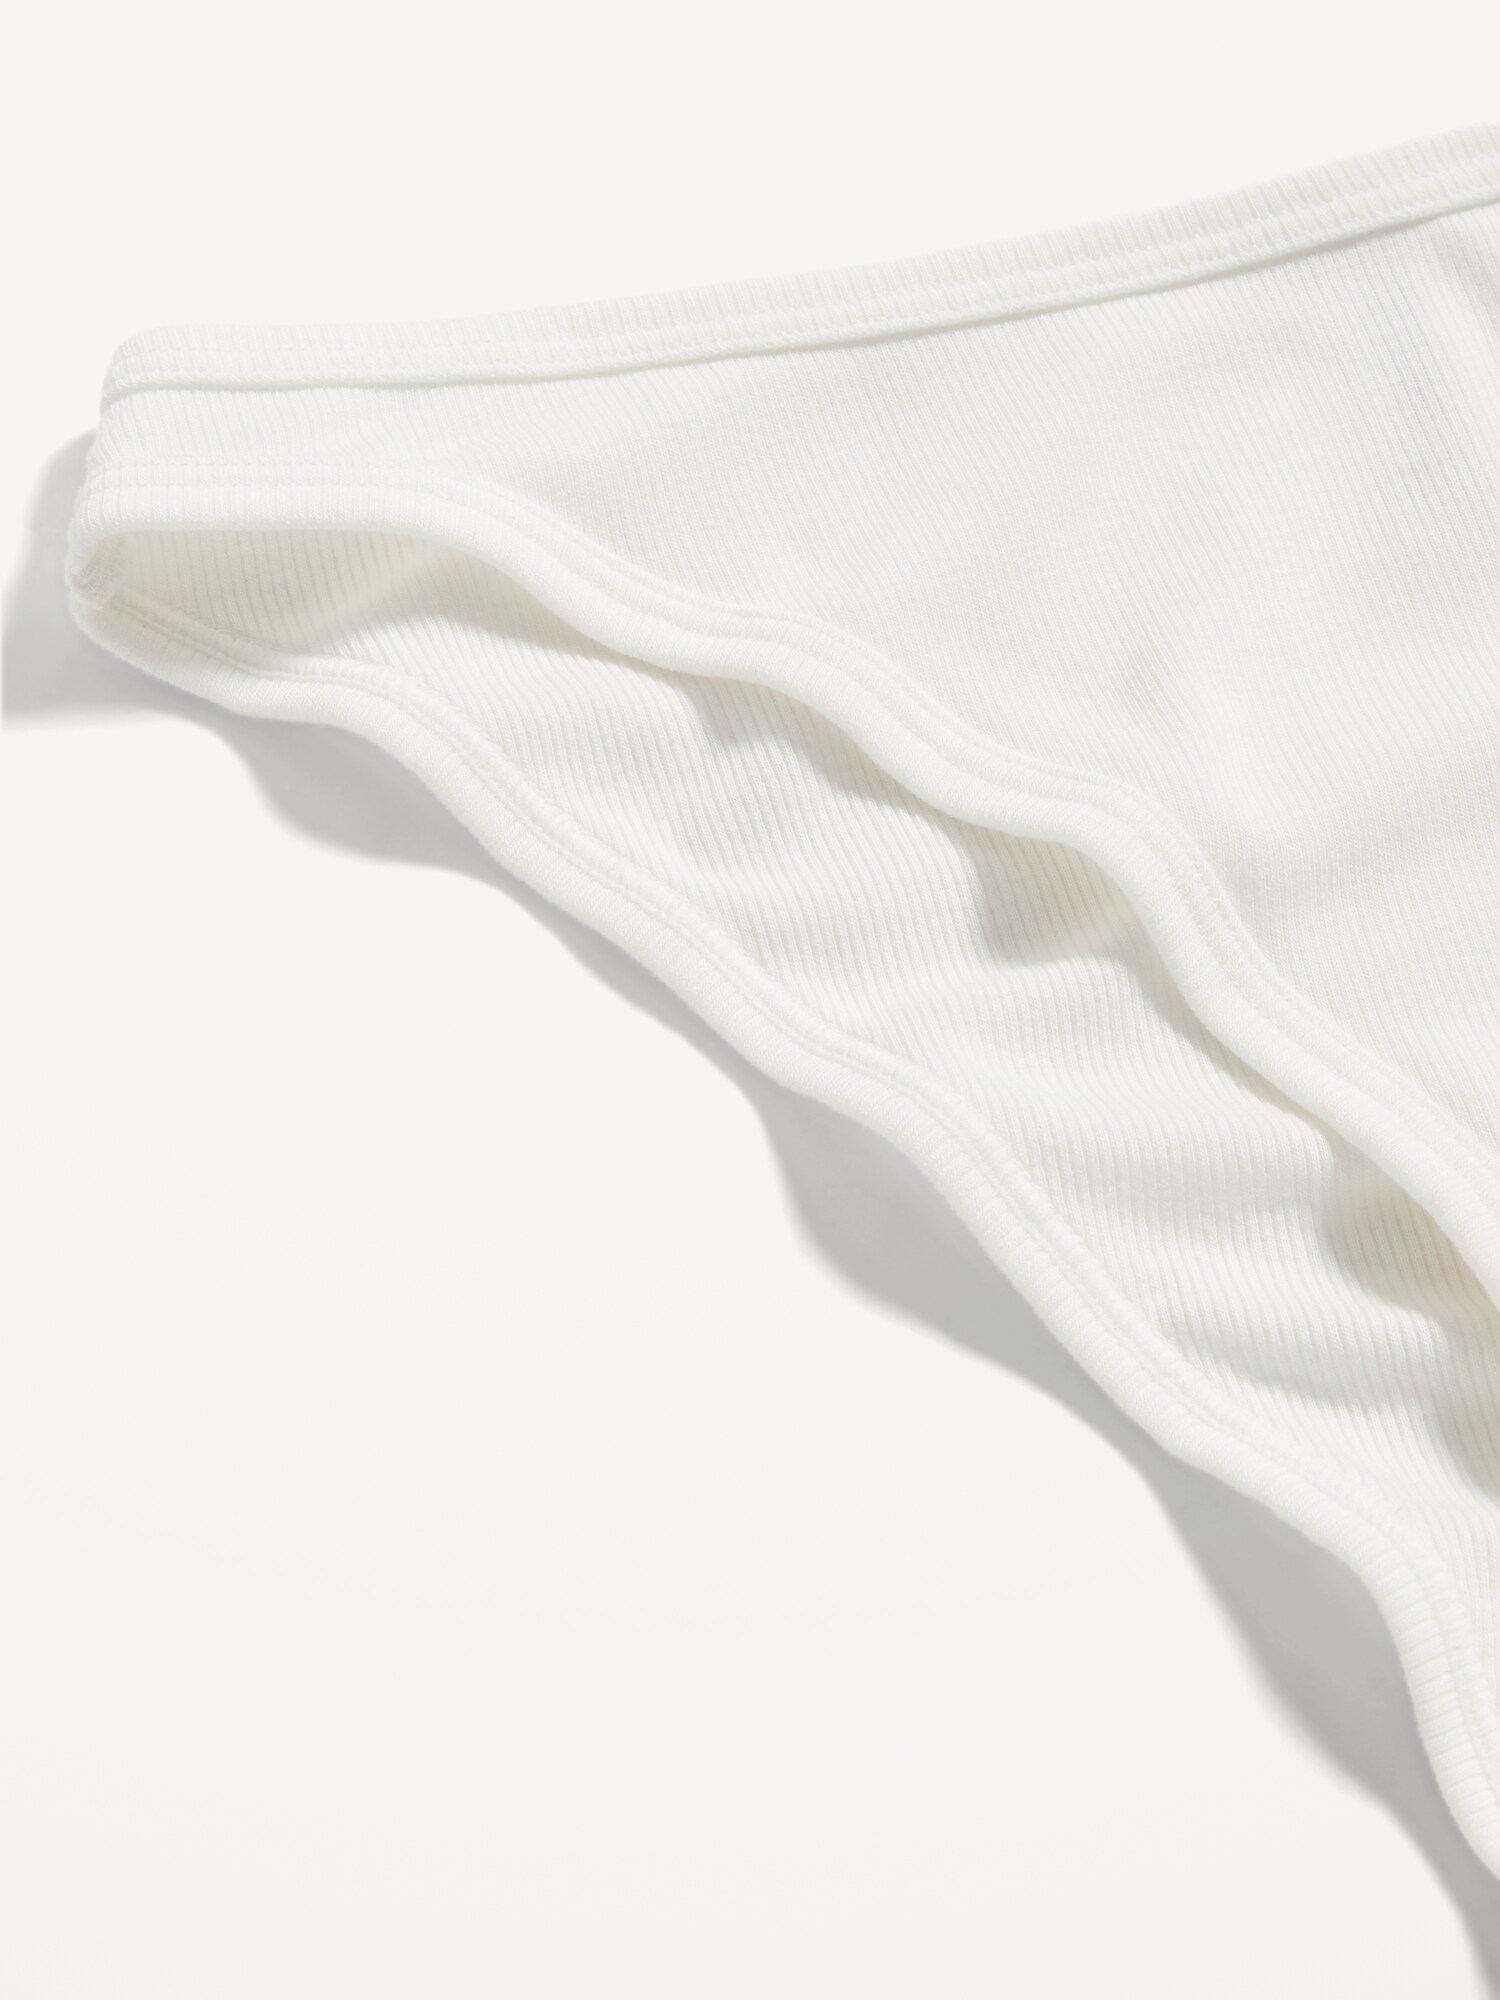 Cathalem French Cut Underwear for Women Women Panties Lace Cutout Hollow  Waist Women Cotton Bikini Underwear Pack Underpants White Medium